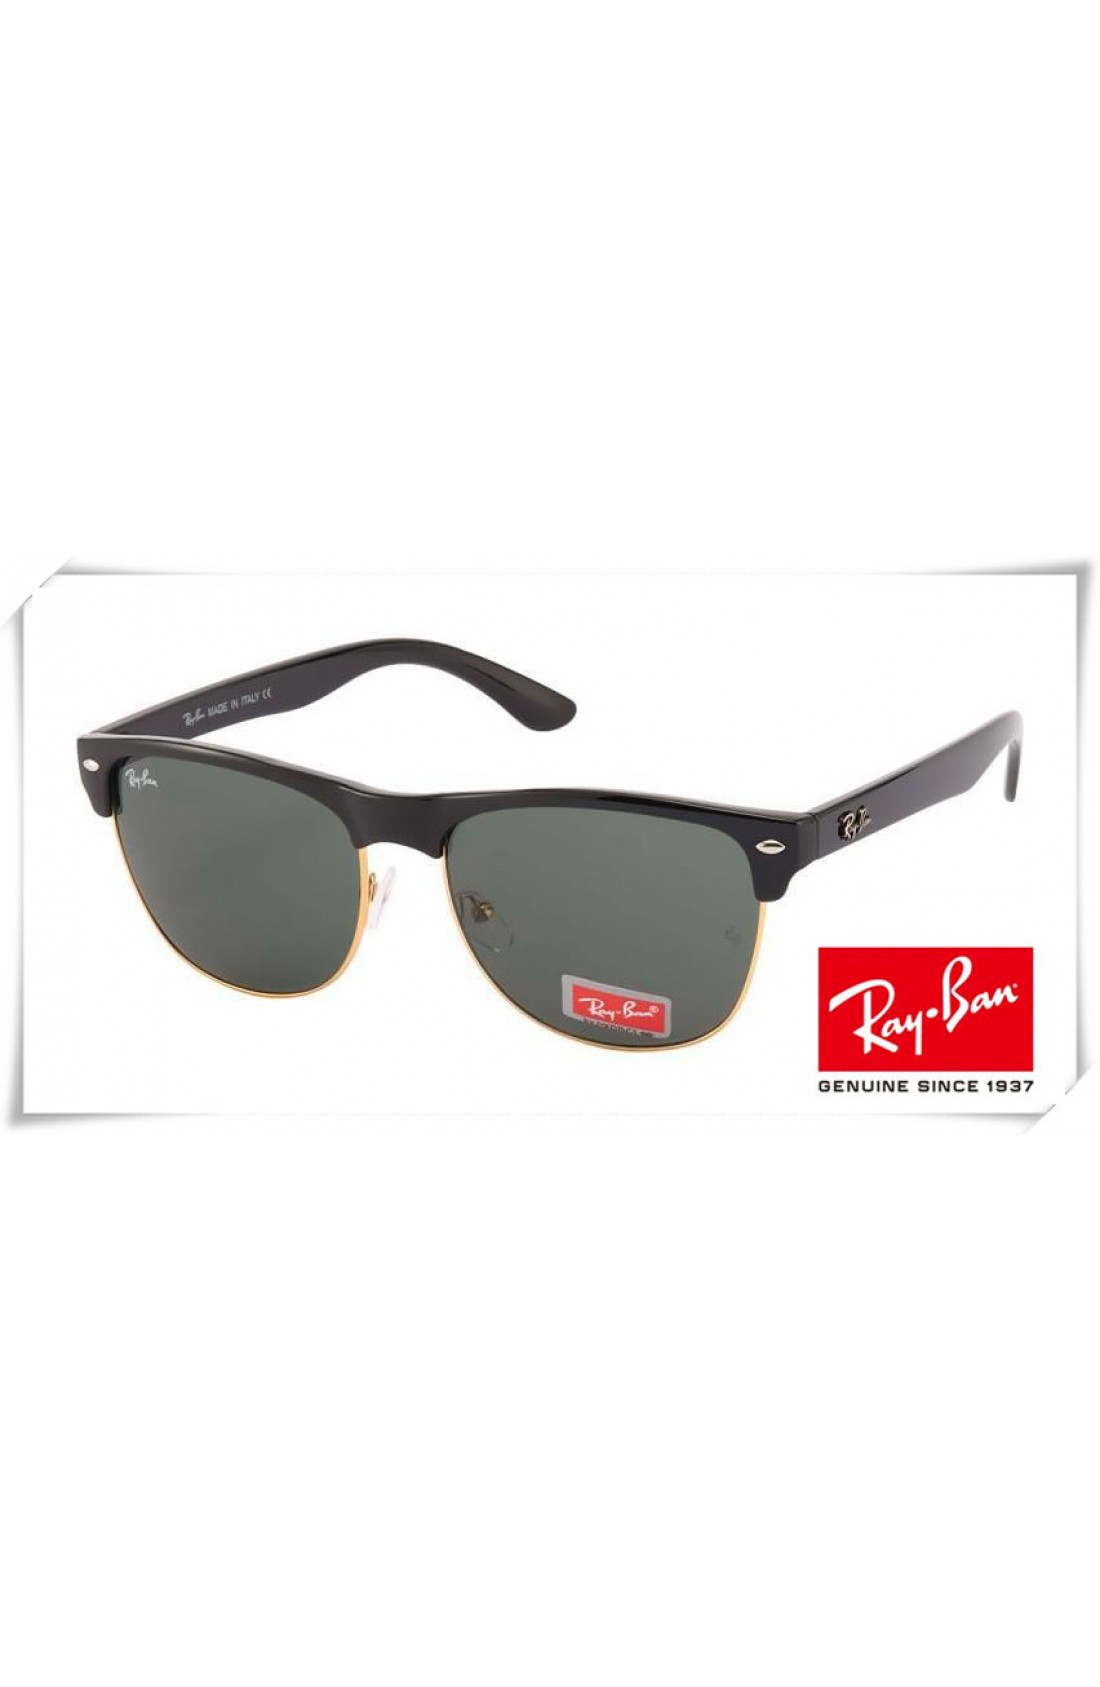 Fake Ray Ban Rb4175 Clubmaster Oversized Sunglasses Black Frame Grey Lens